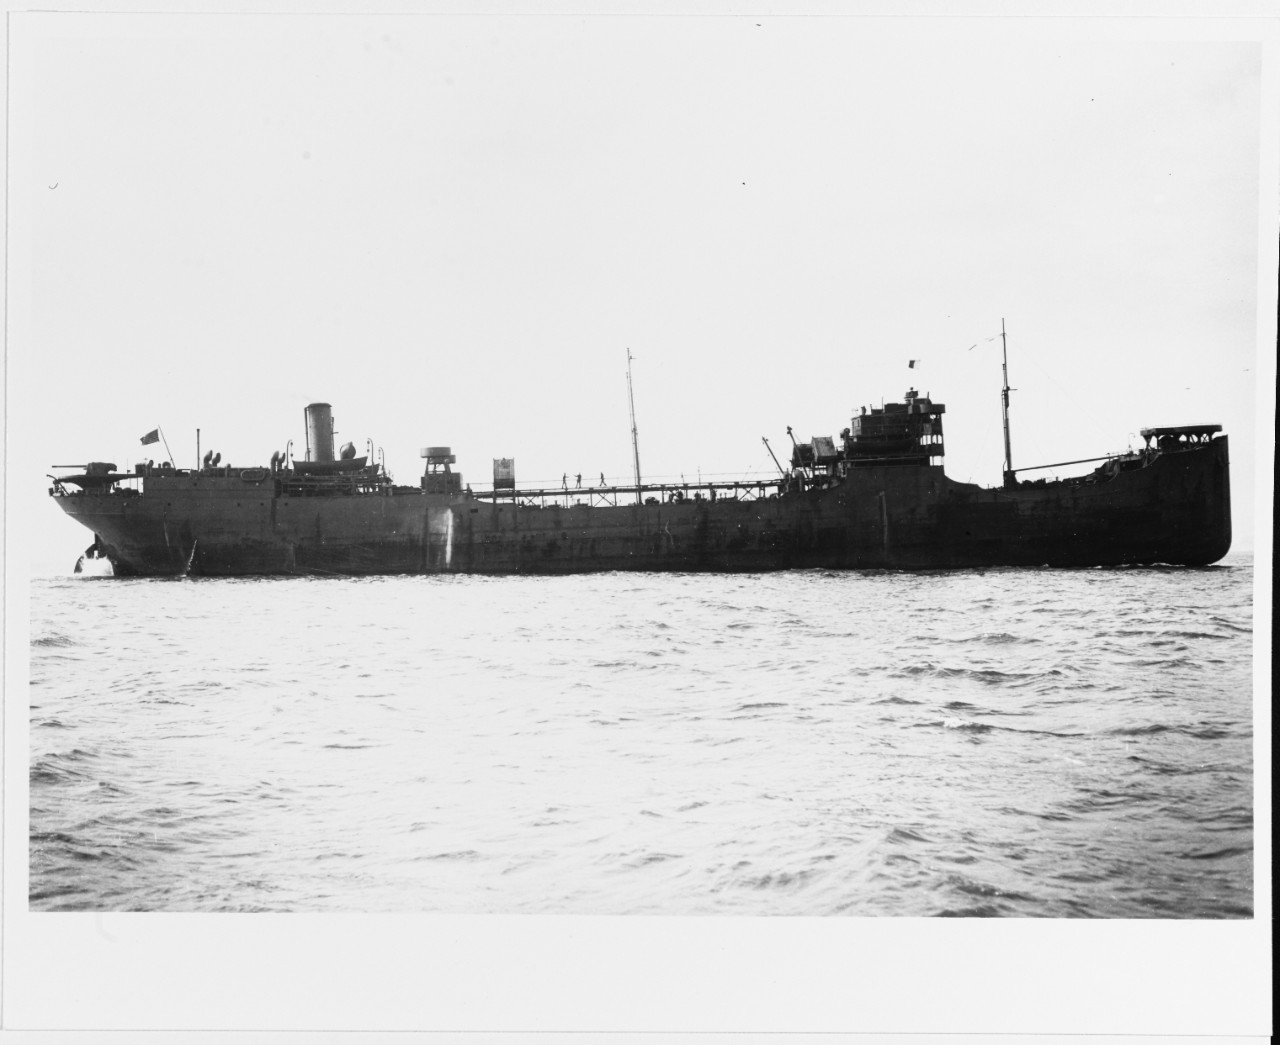 S.S. ELWOOD (American Merchant Tanker, 1918-1950)